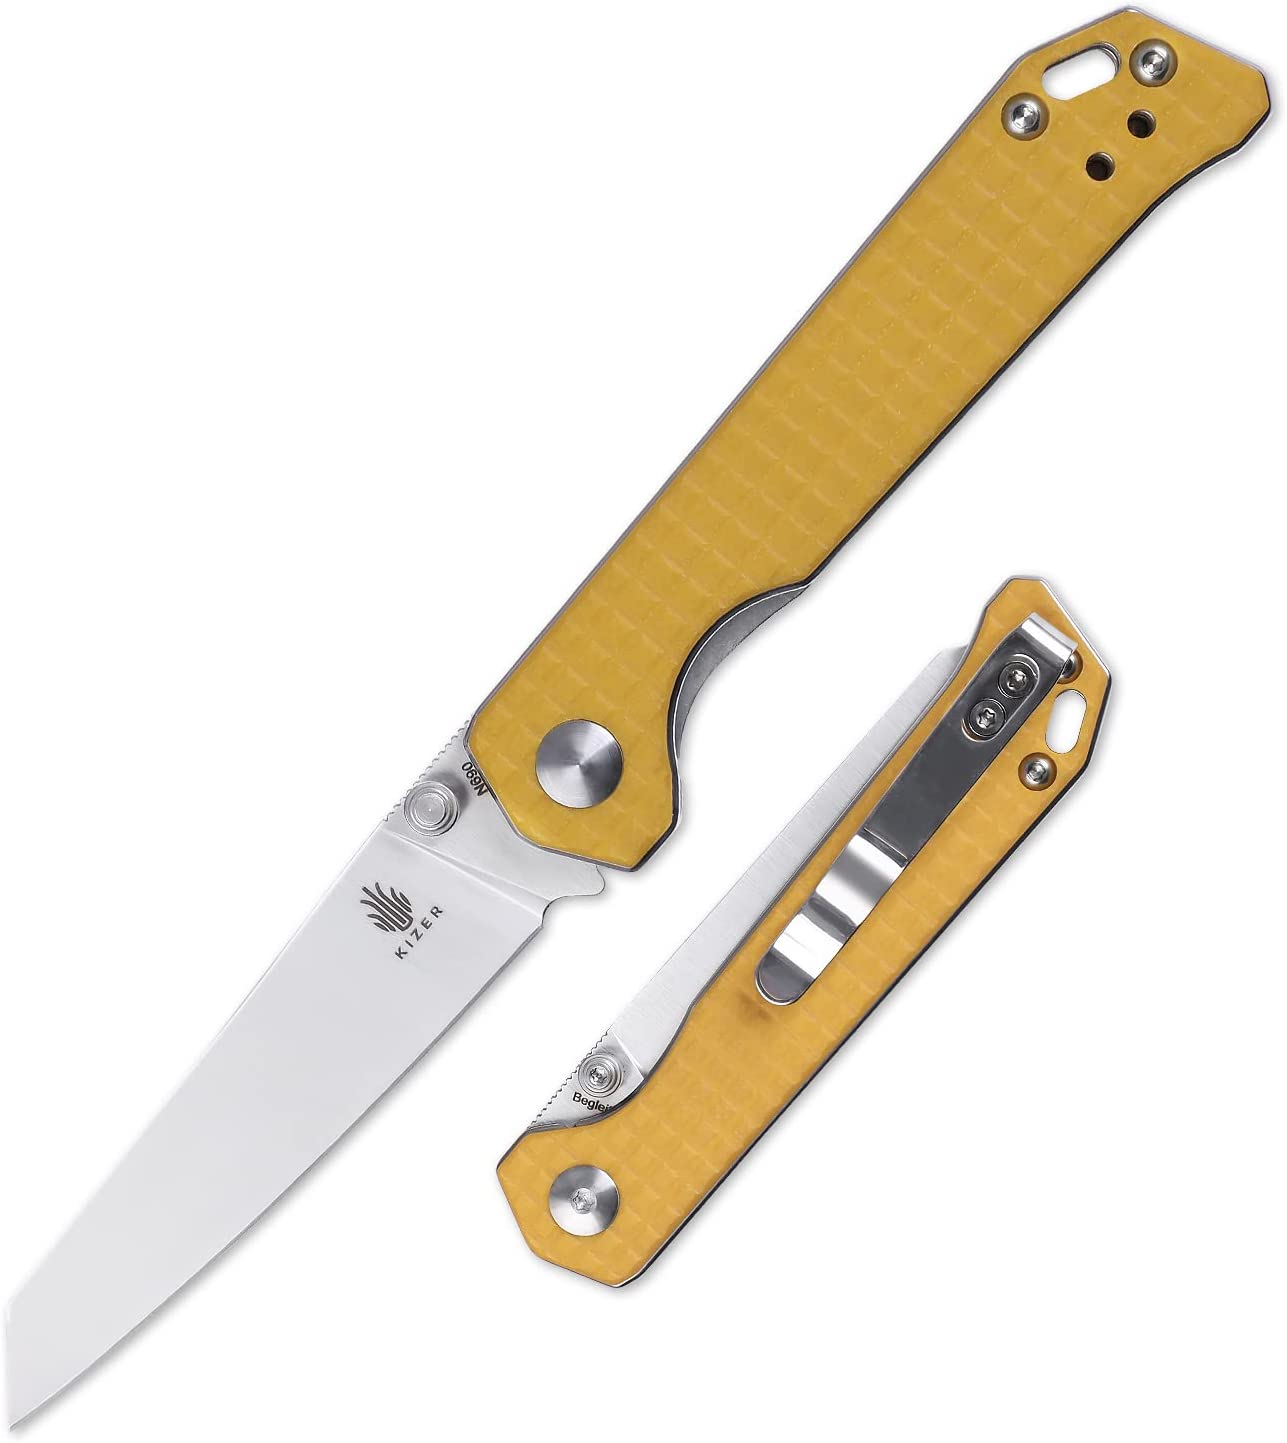 Kizer Begleiter Mini Small EDC Knife, N690 Blade with G10 Handle, Pineapple Color Knife, V3458RN4